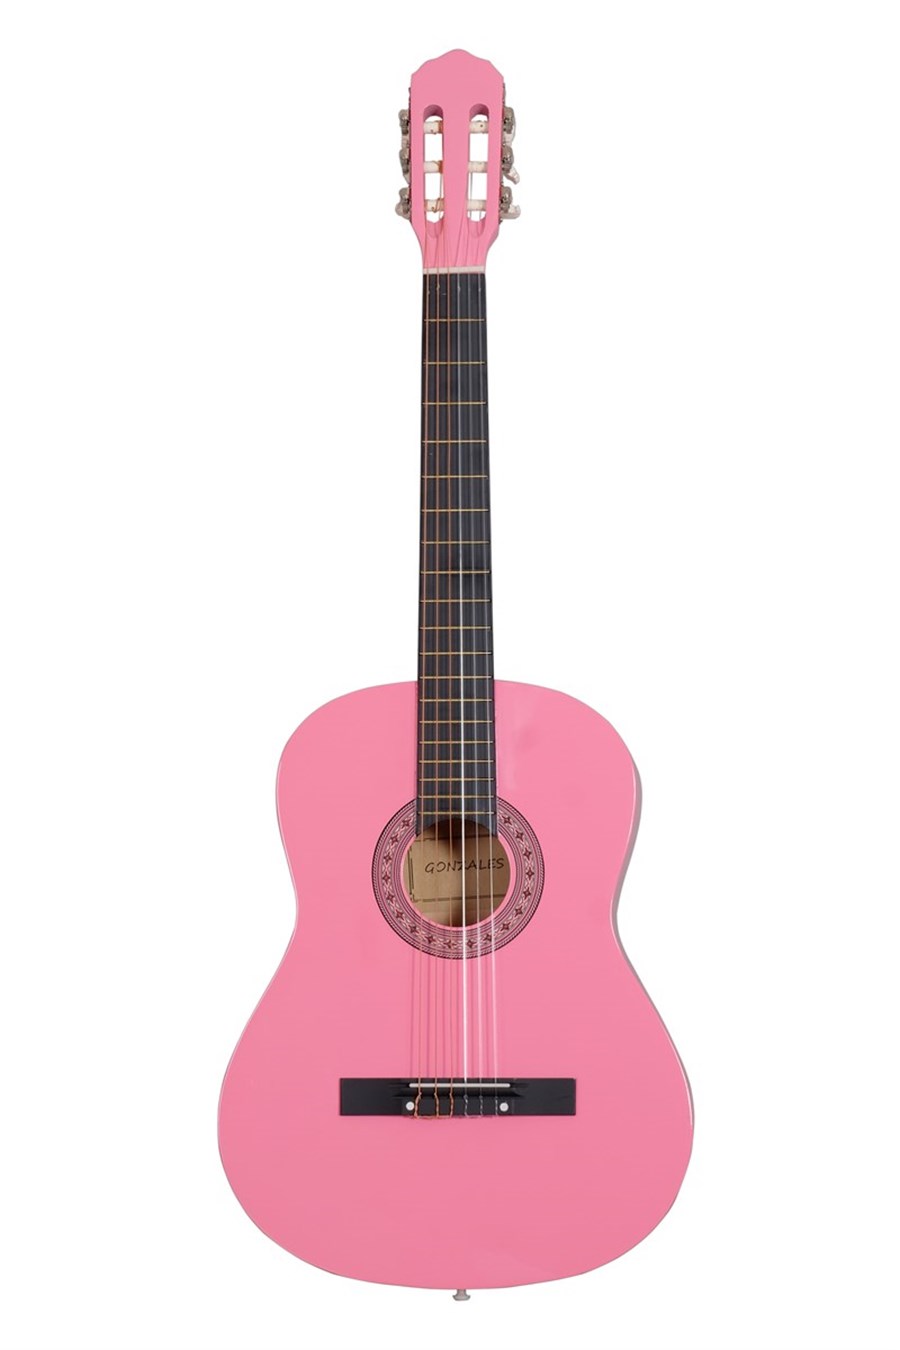 Gonzales M831-PK 38'' Klasik Gitar (Pembe)® MeduMuzikMarket.com'da